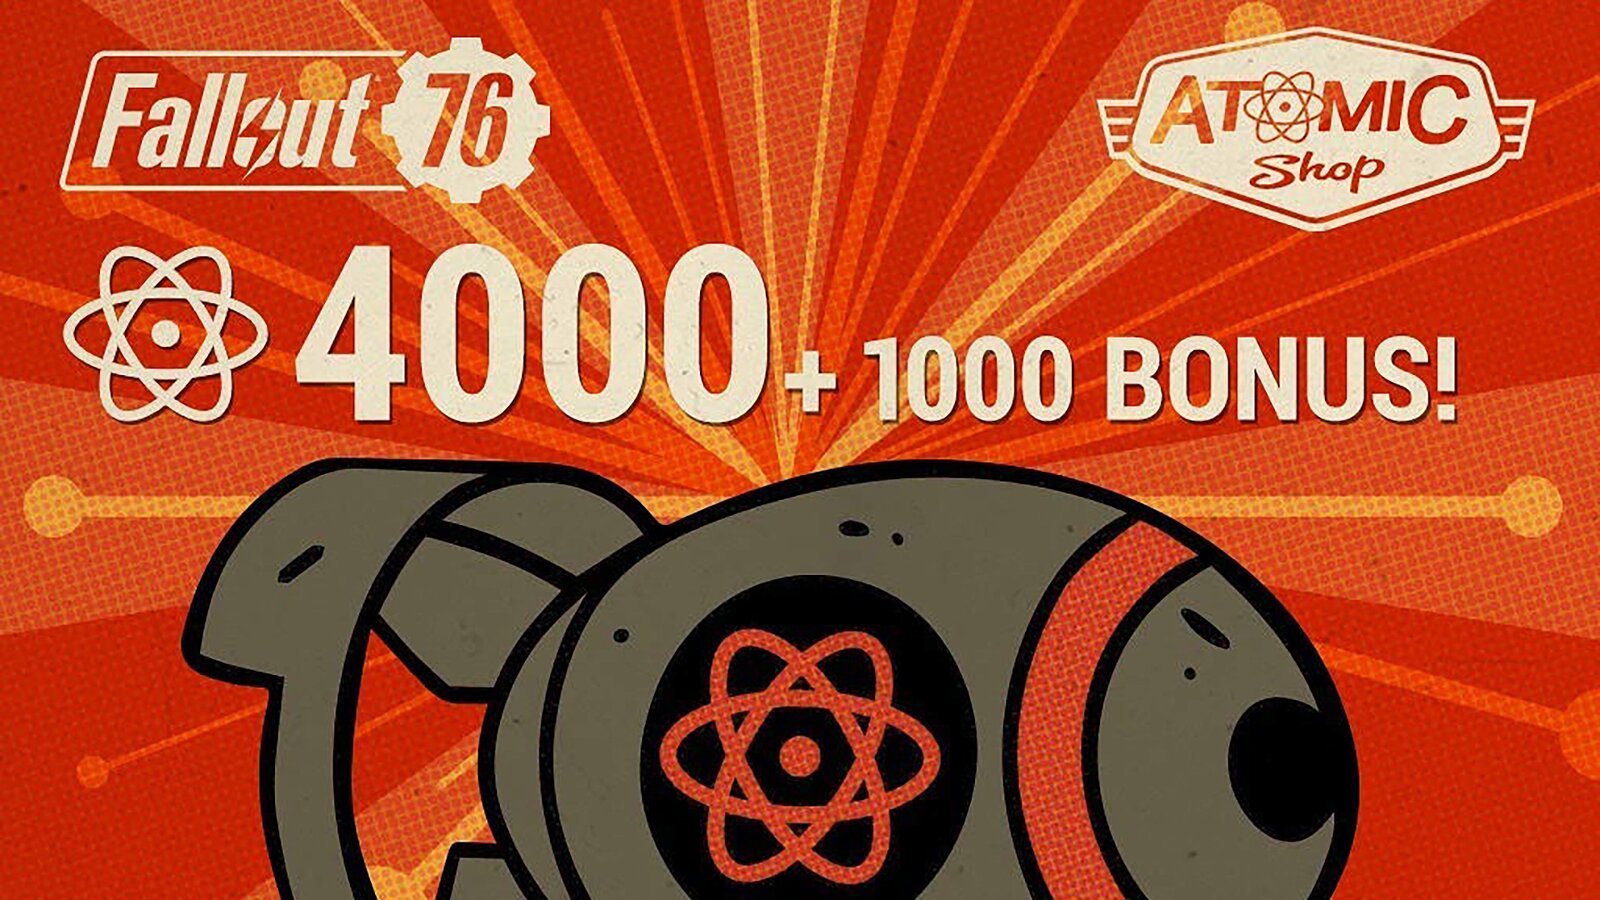 Fallout 76: 4000 (+100 Bonus) Atoms